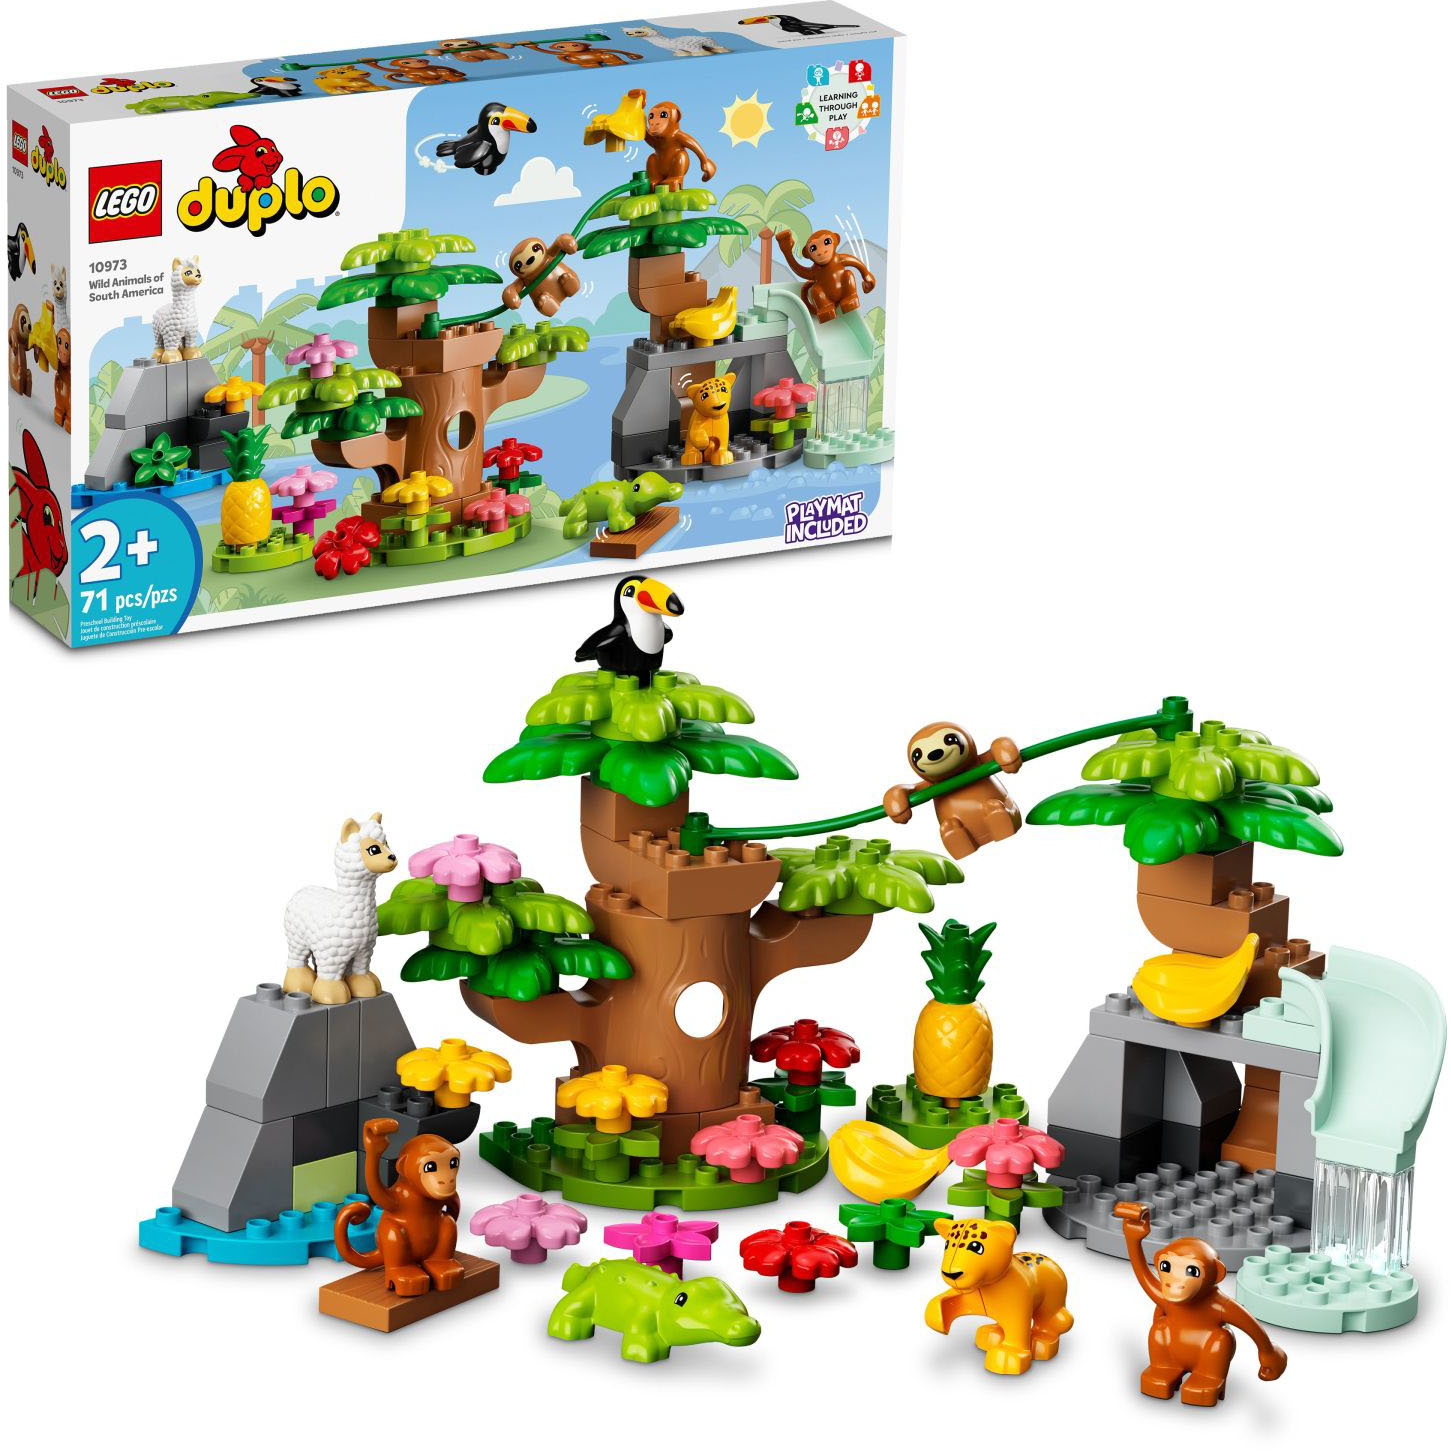 LEGO DUPLO Wild Animals of South America 10973 6379267 - Best Buy